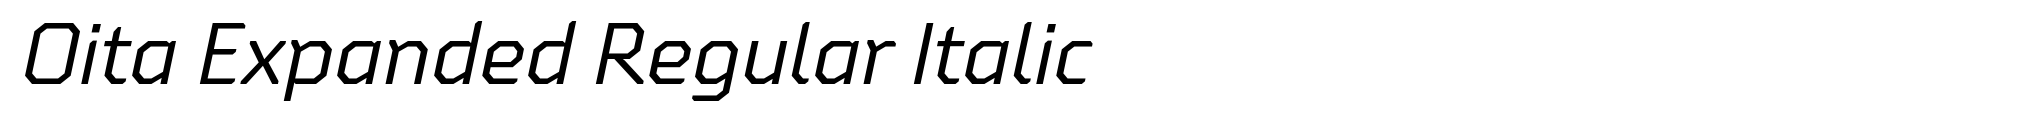 Oita Expanded Regular Italic image